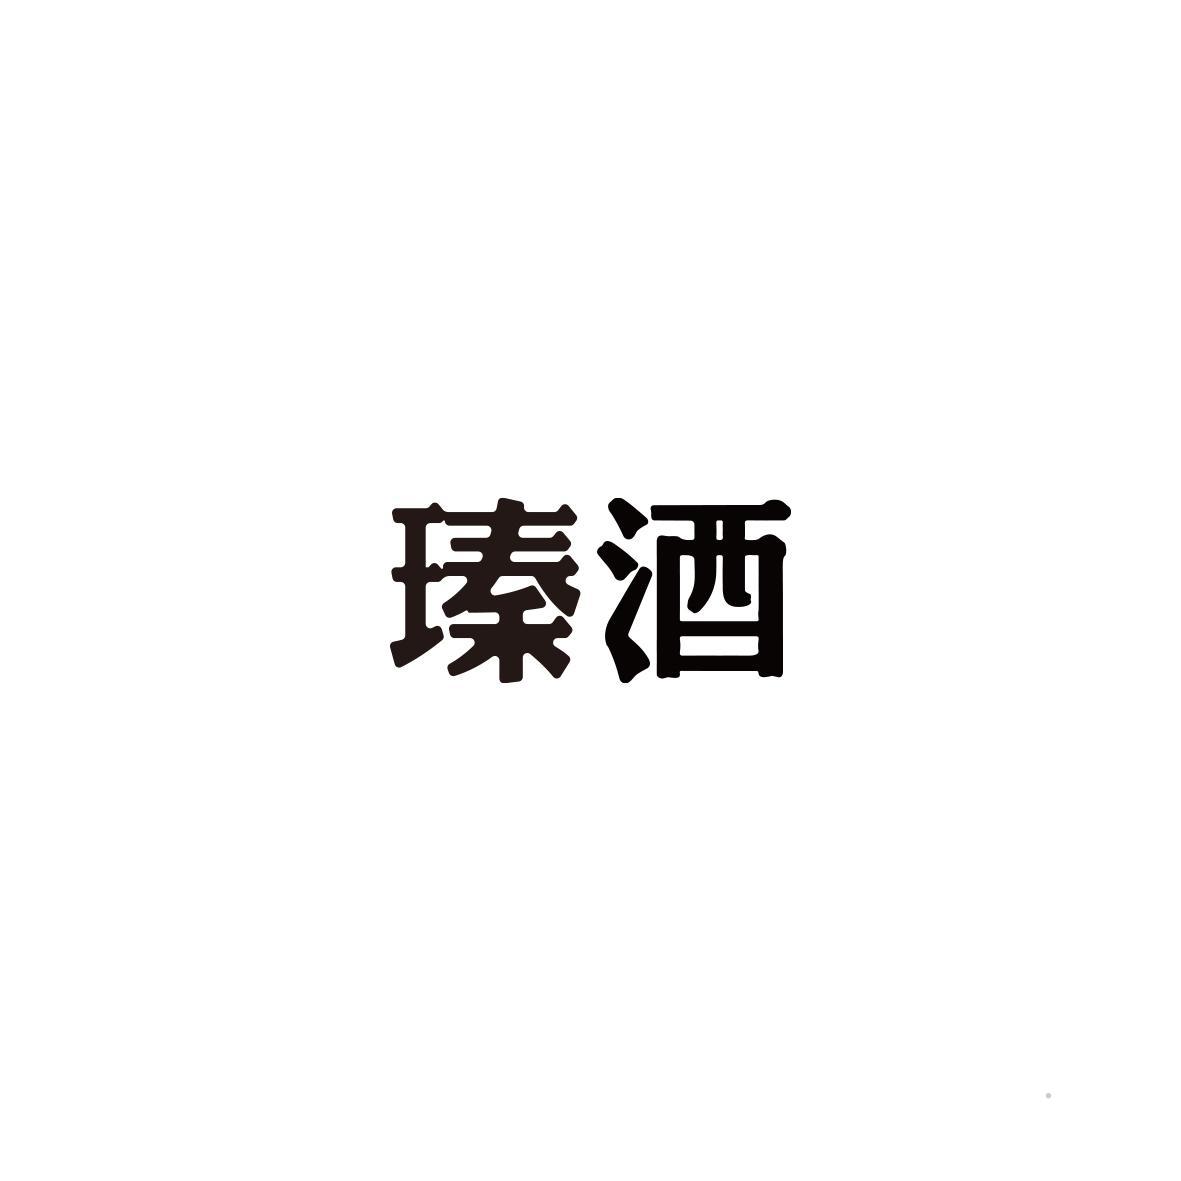 瑧酒logo